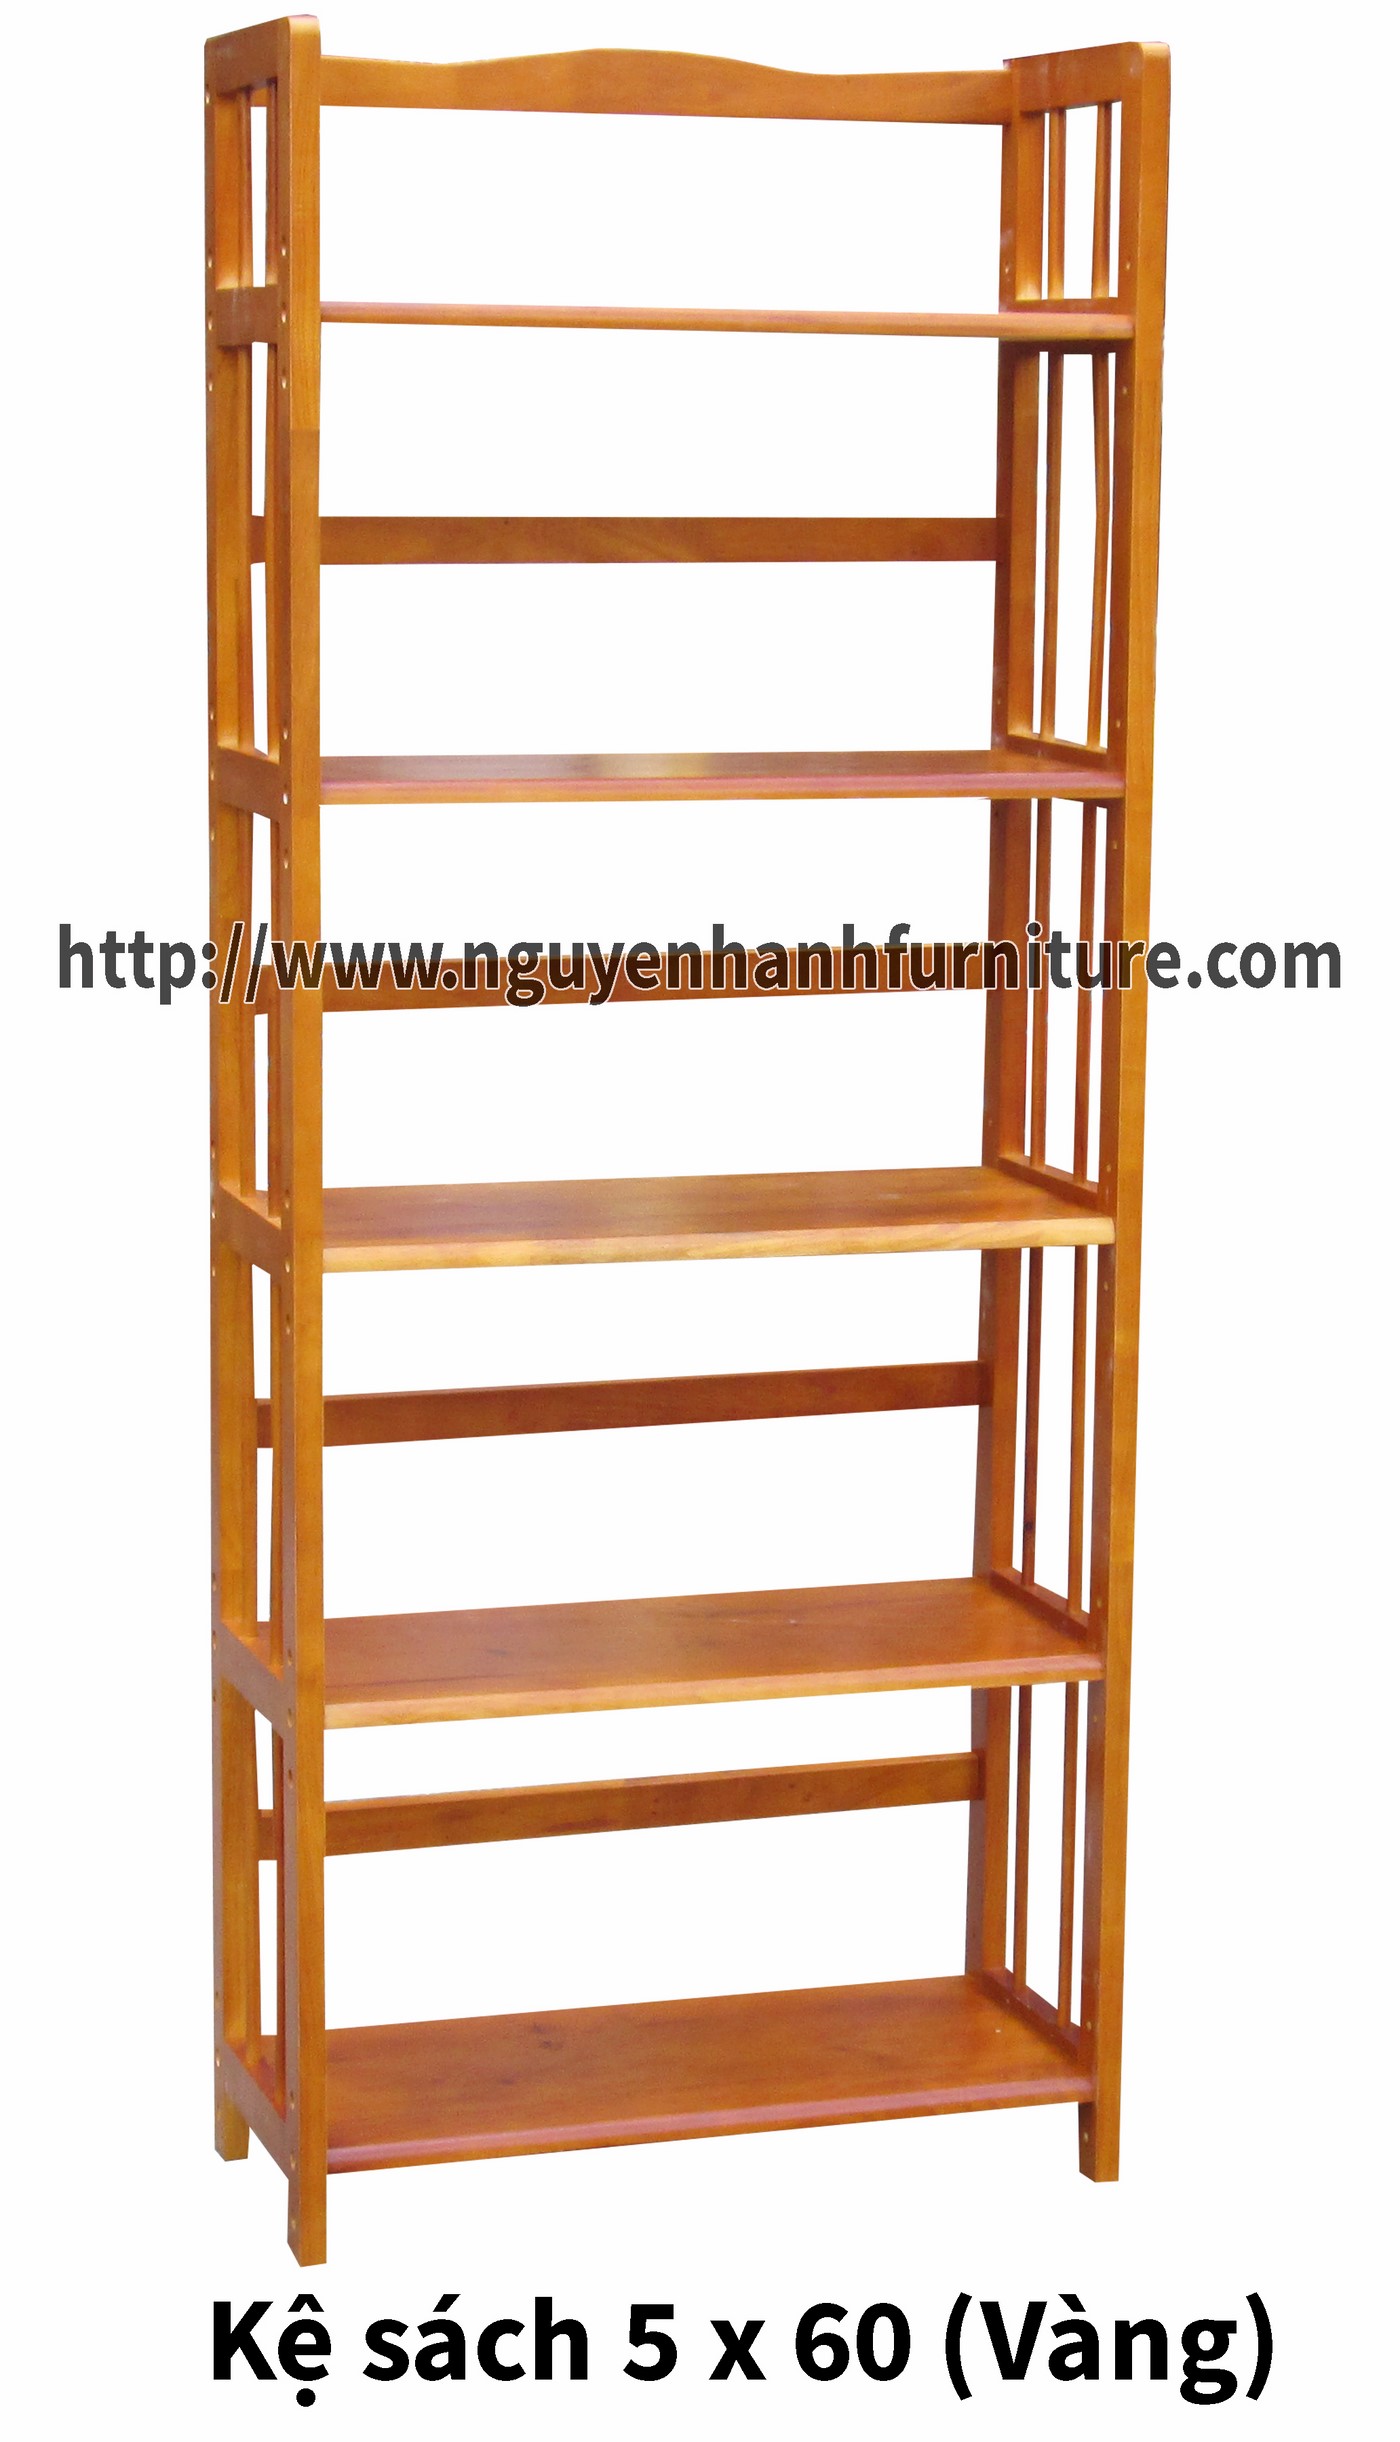 Name product: 5 storey Adjustable Bookshelf 60 (Yellow) - Dimensions: 63 x 28 x 157 (H) - Description: Wood natural rubber